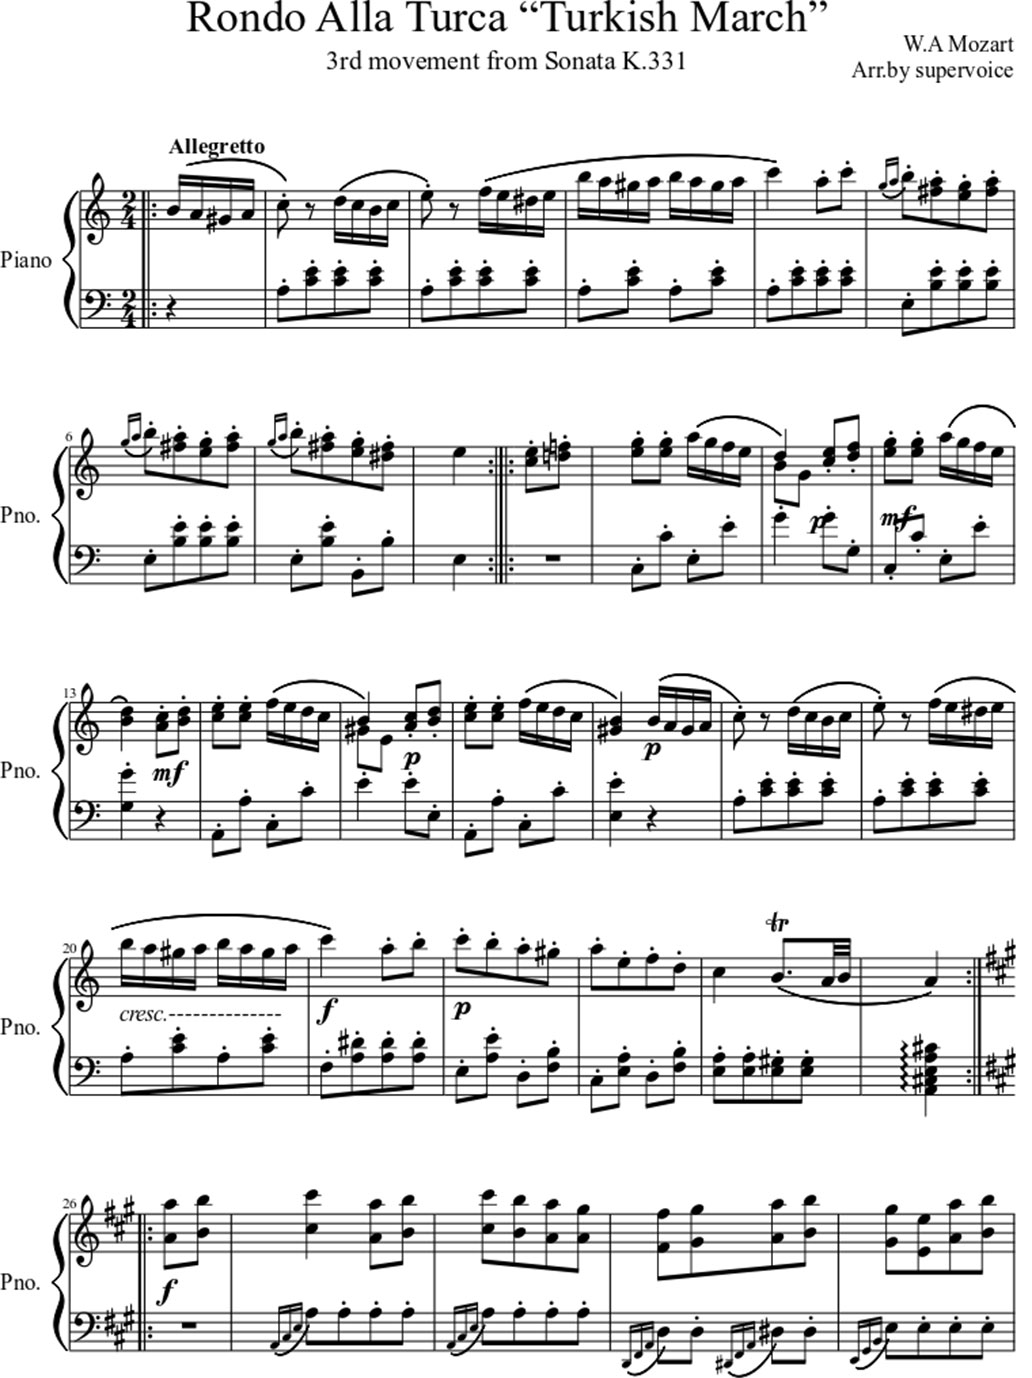 Tuskish March sheet piano 1